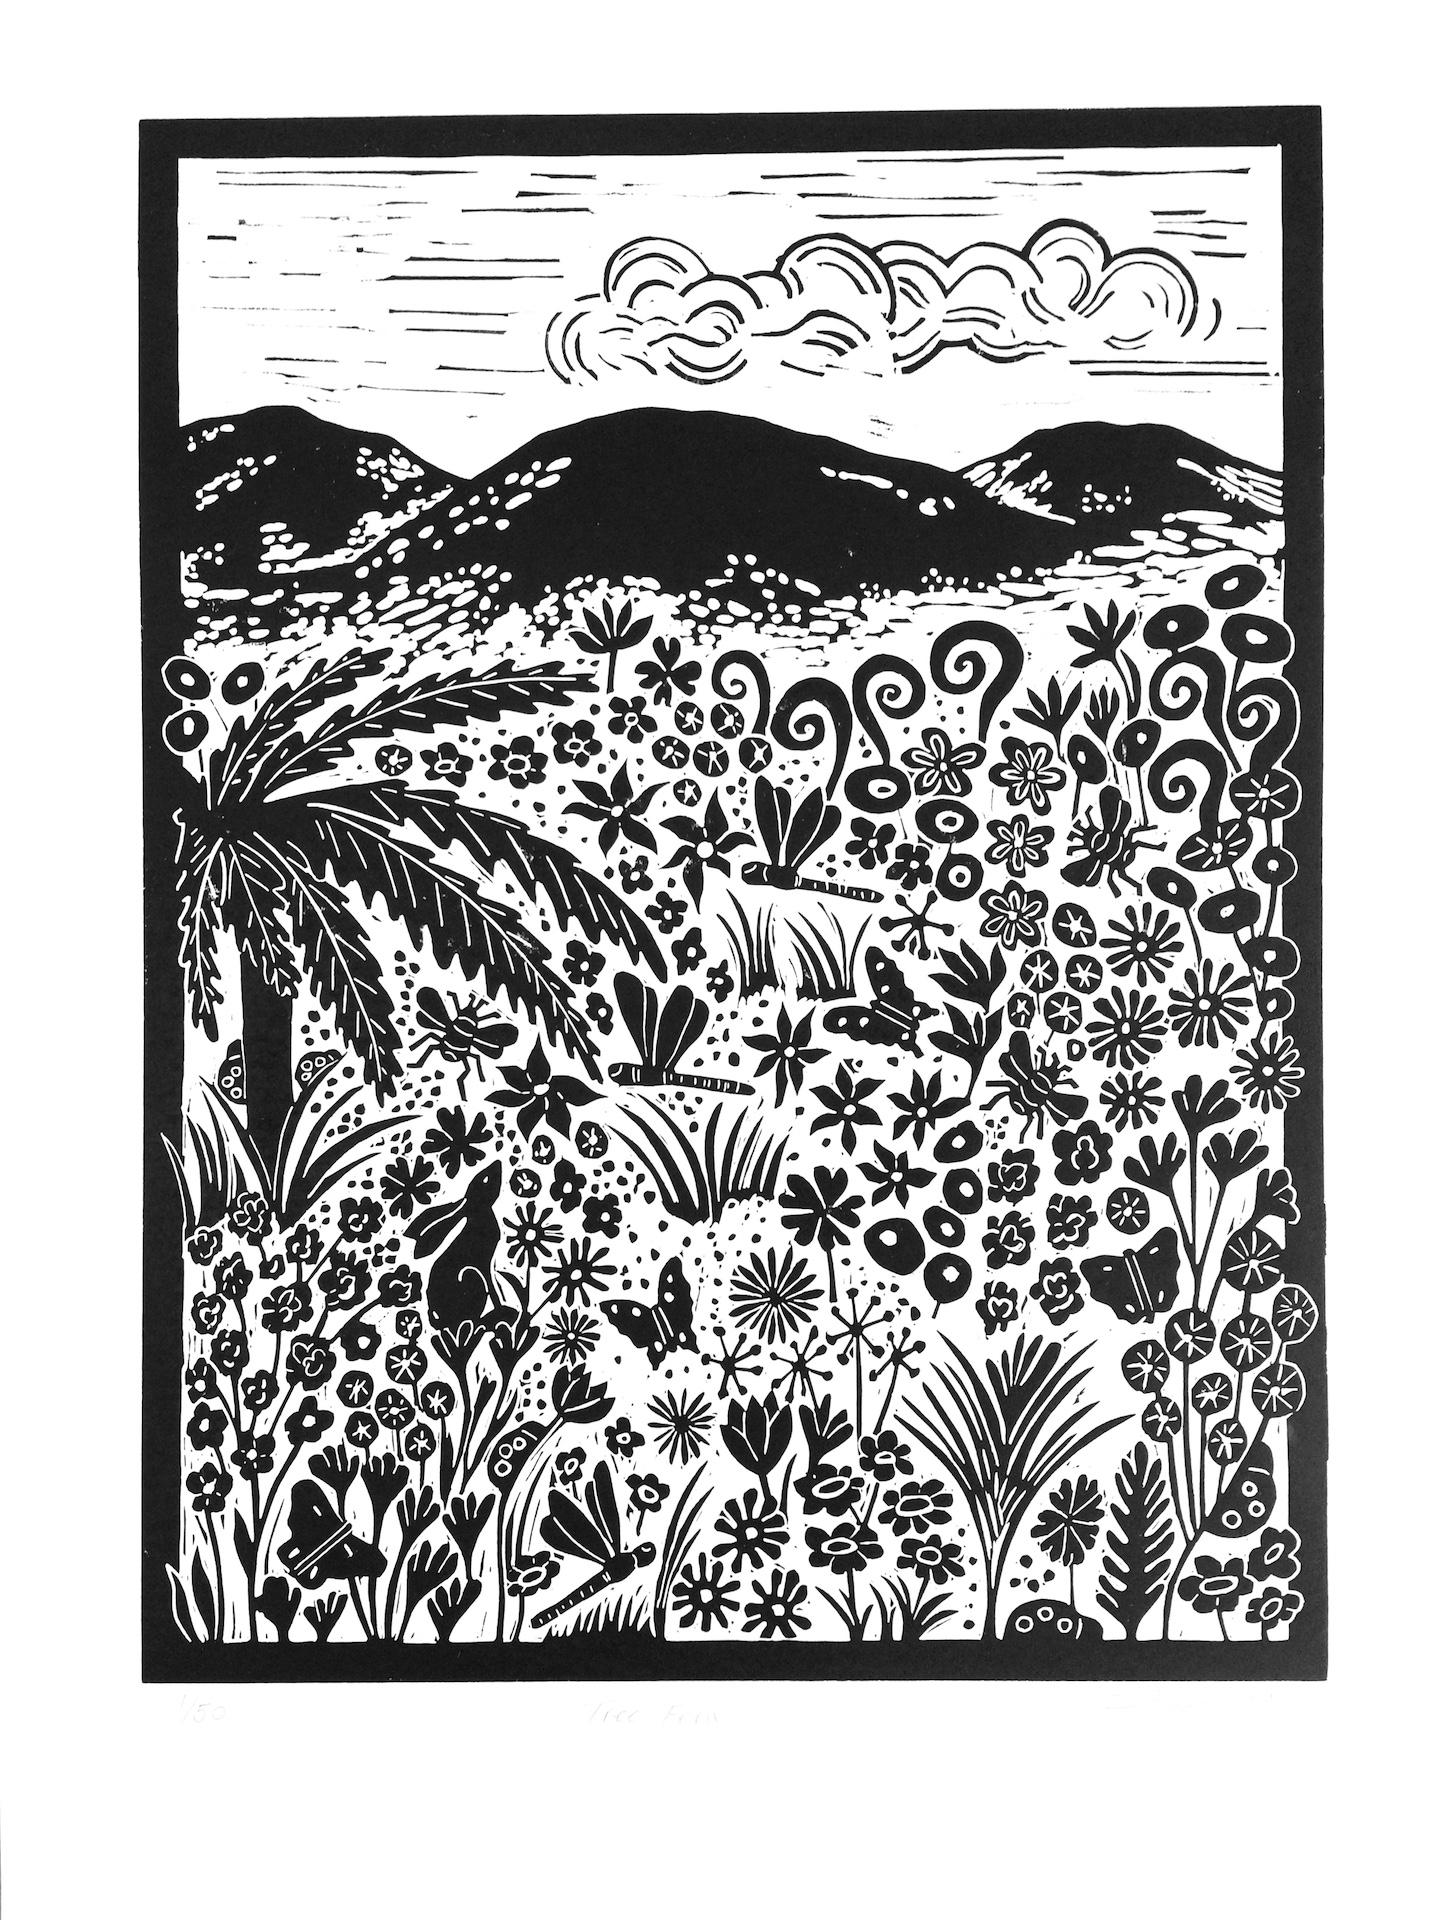 Scottish Landscape Tree Silhouette Original Limited Edition Lino Print Linocut Art